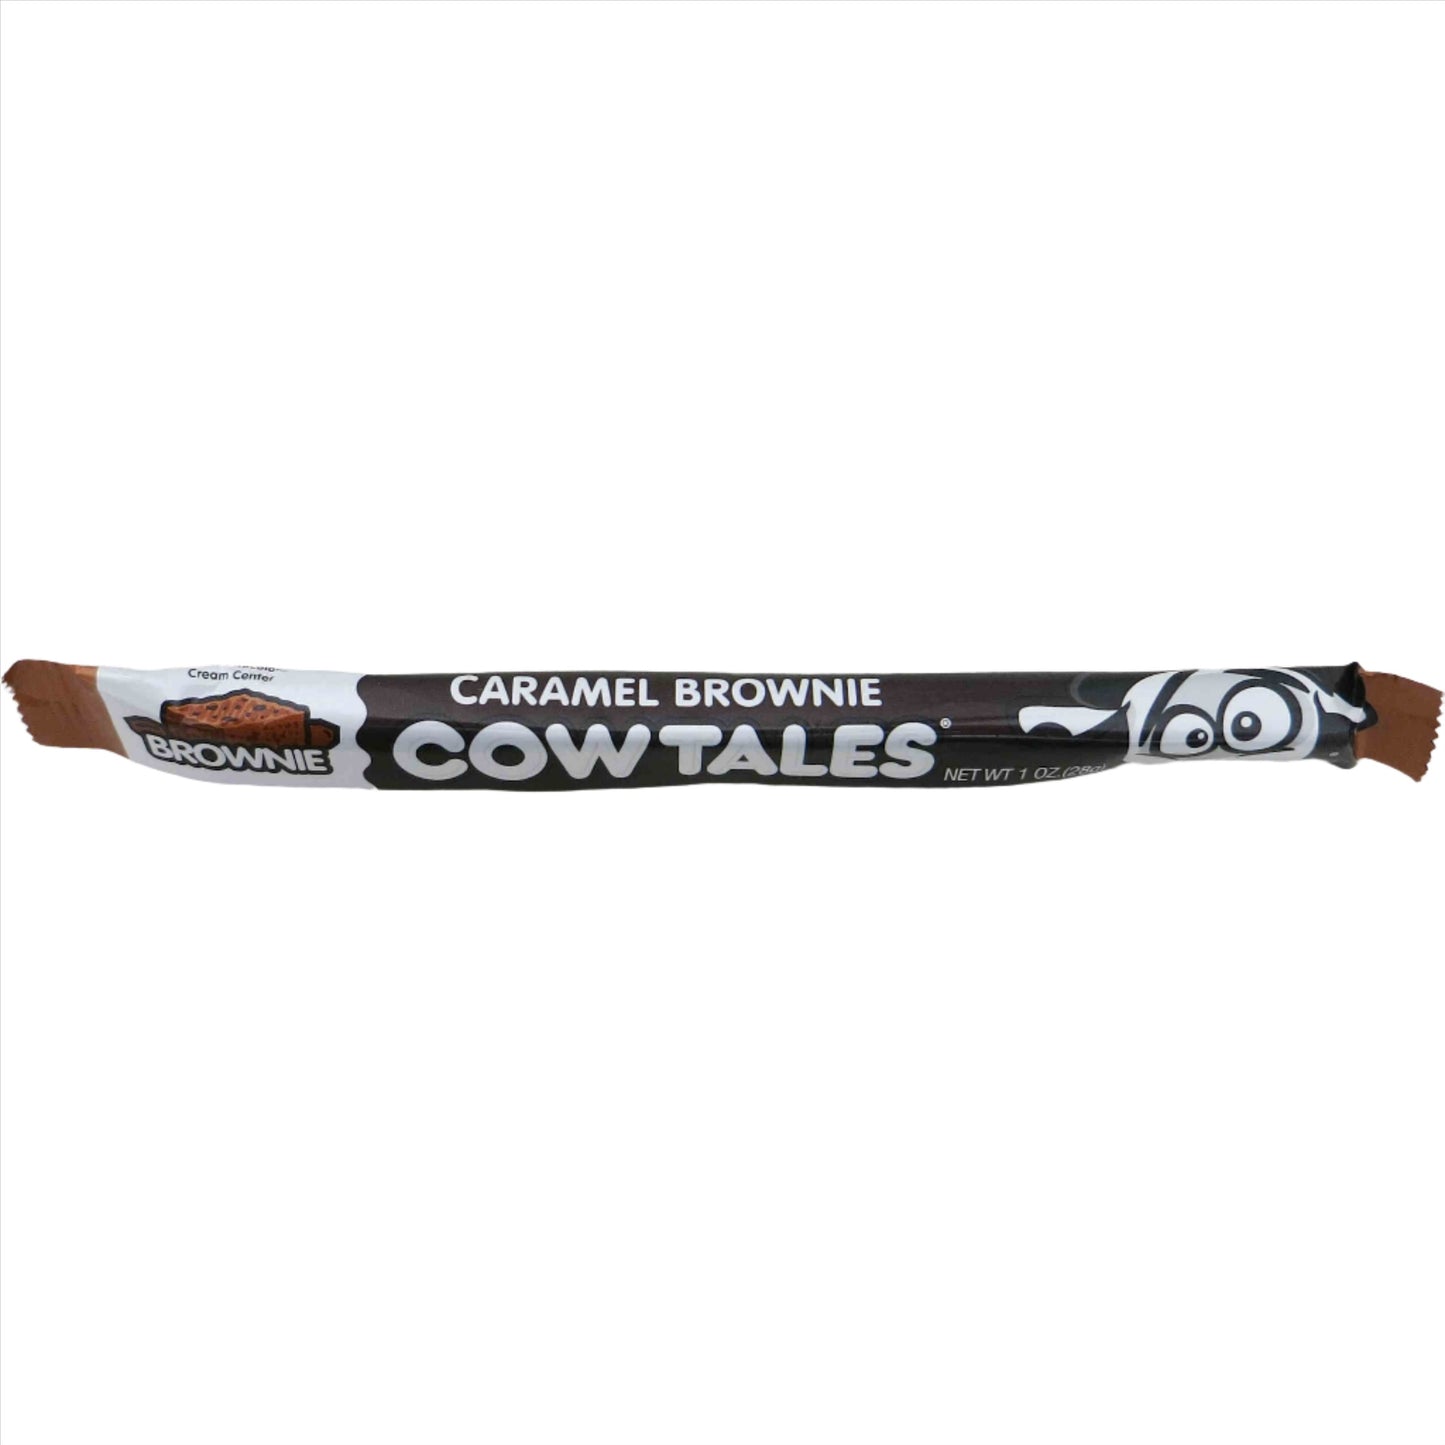 Cow Tales Caramel Brownie 28g - Worldster Markt e.K.